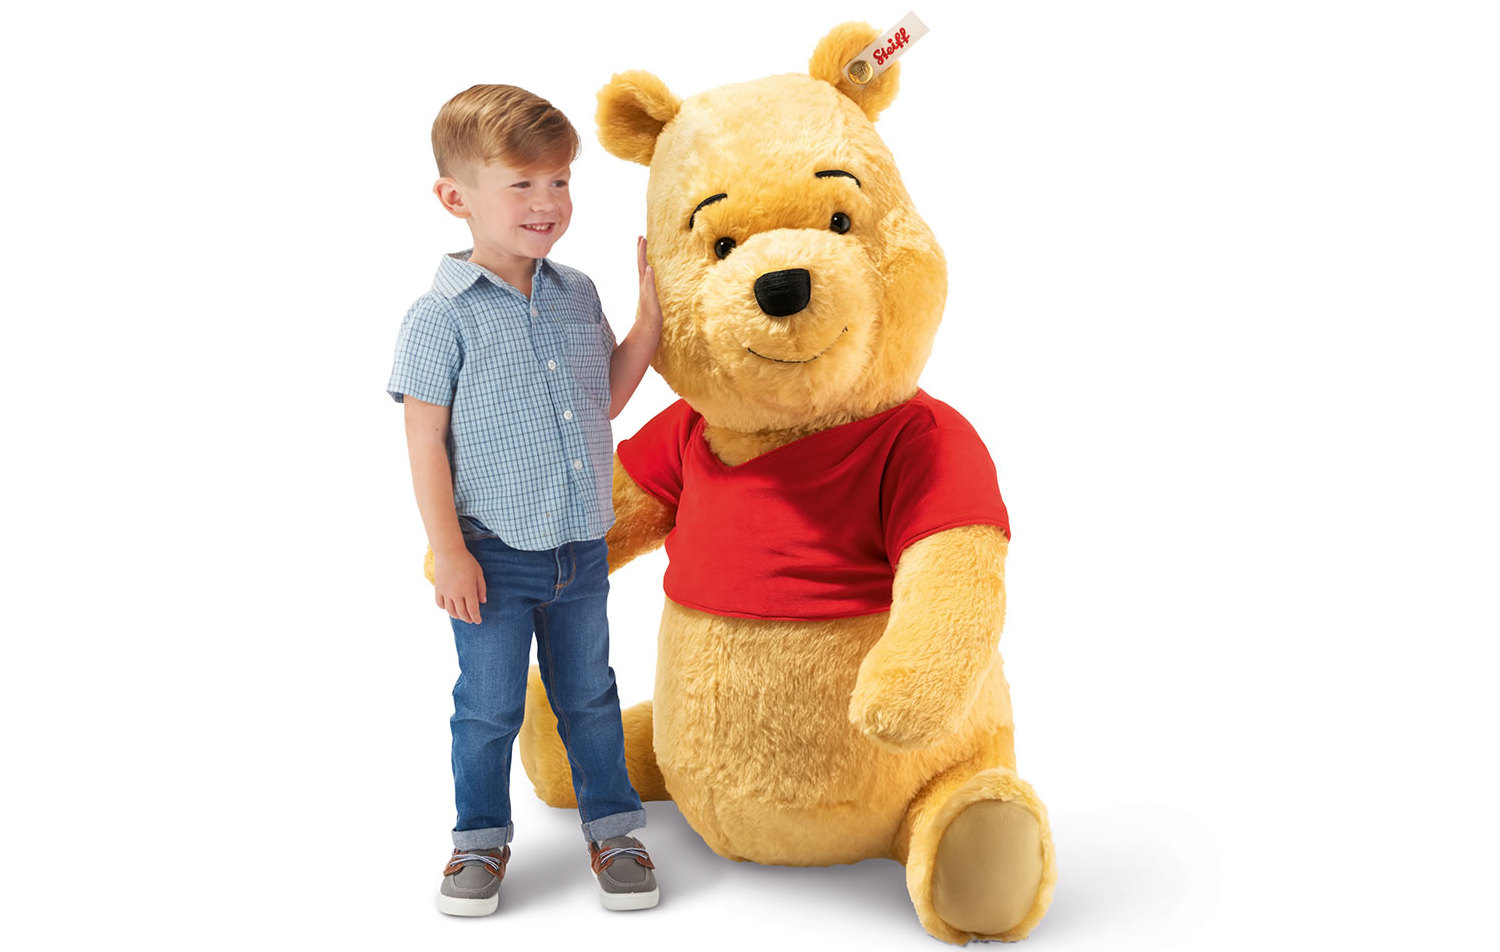 pooh bear soft toy online